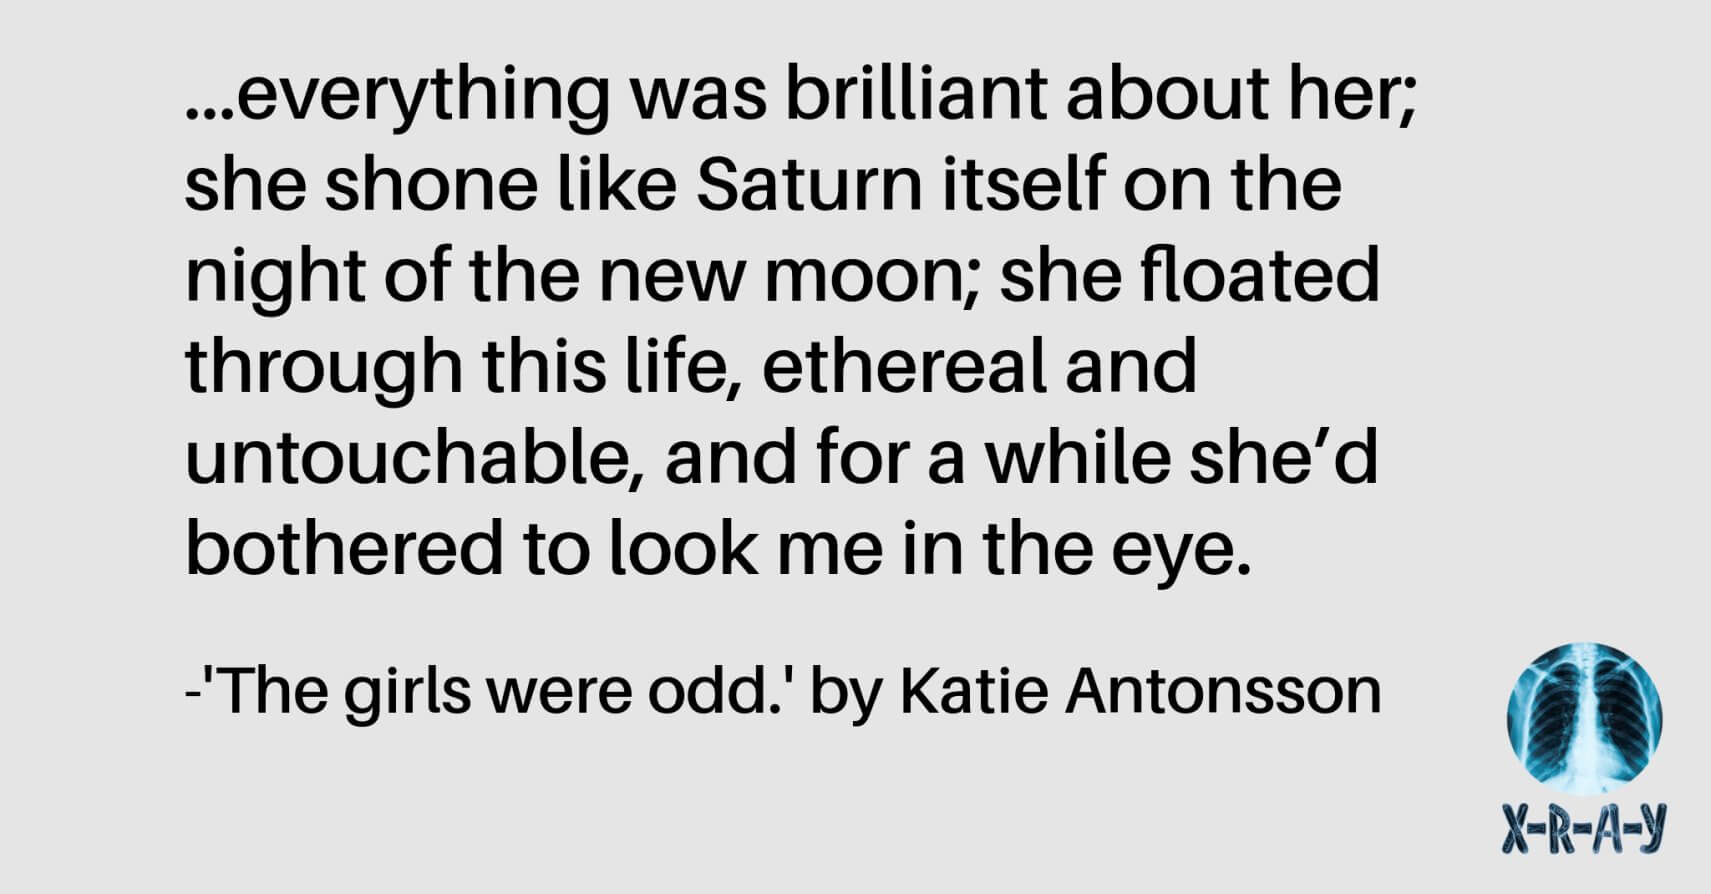 The girls were odd. by Katie Antonsson